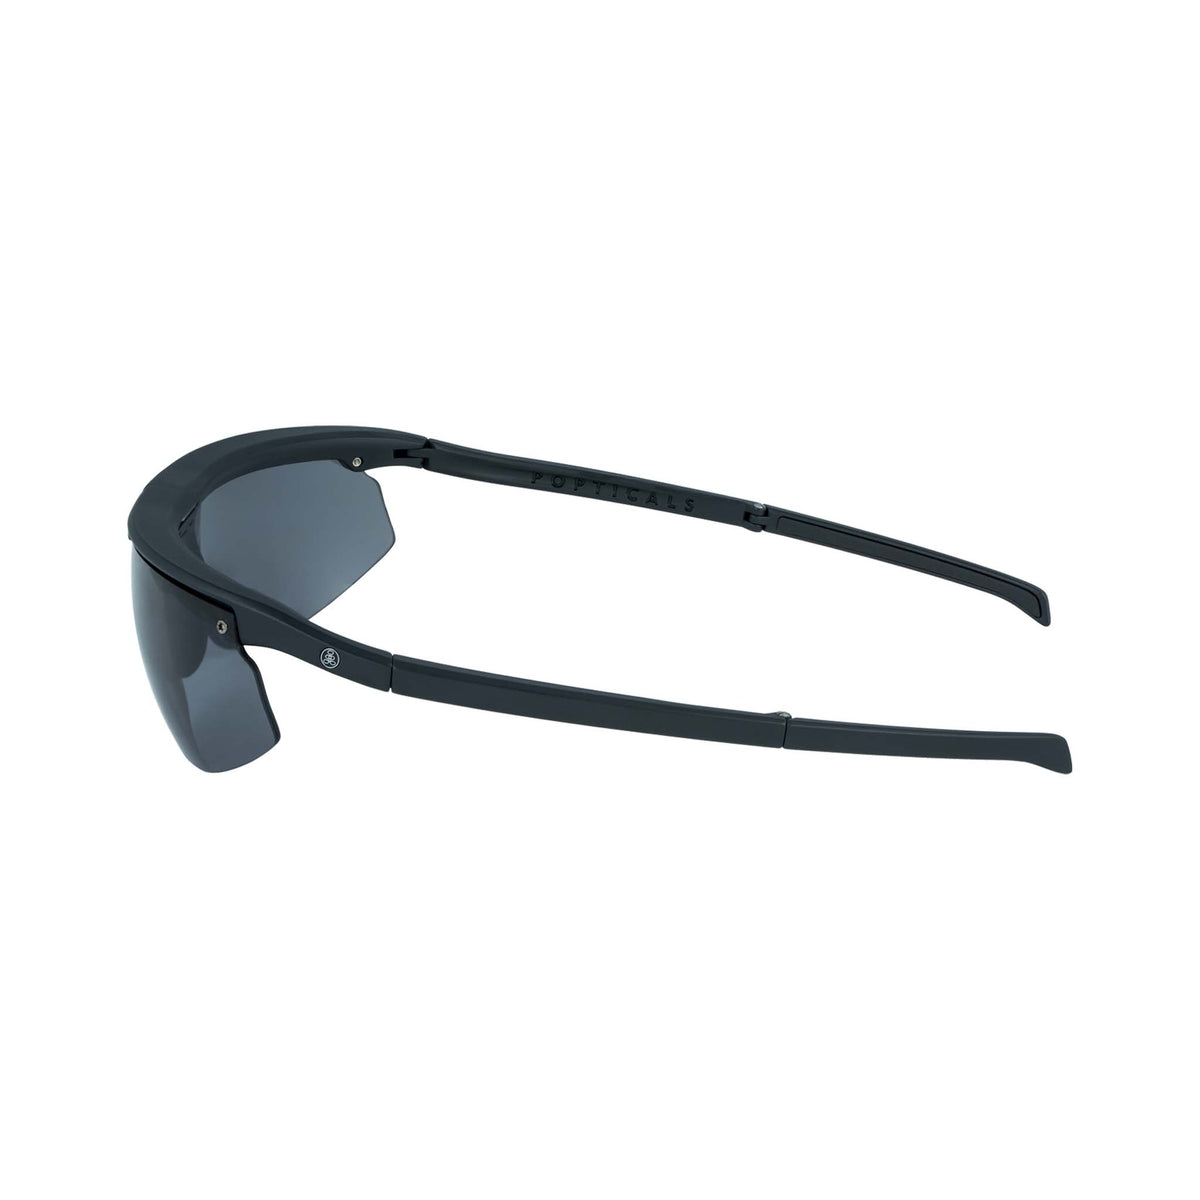 Popticals, Premium Compact Sunglasses, PopStar, 010040-BMGS, Standard Sunglasses, Matte Black Frame, Gray Lenses, Side View